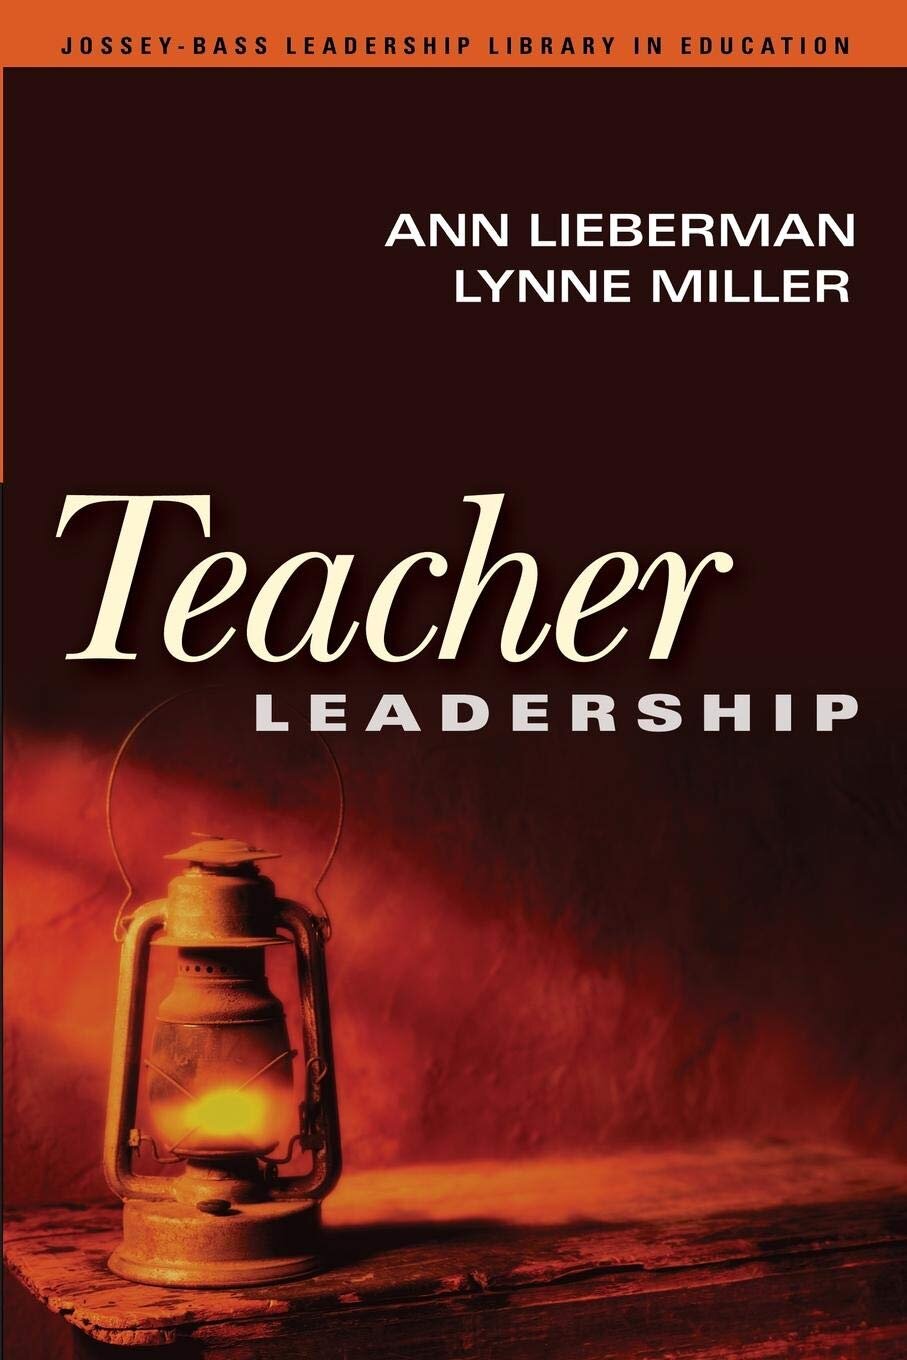 Teacher Leadership - Ann Lieberman and Lynne Miller